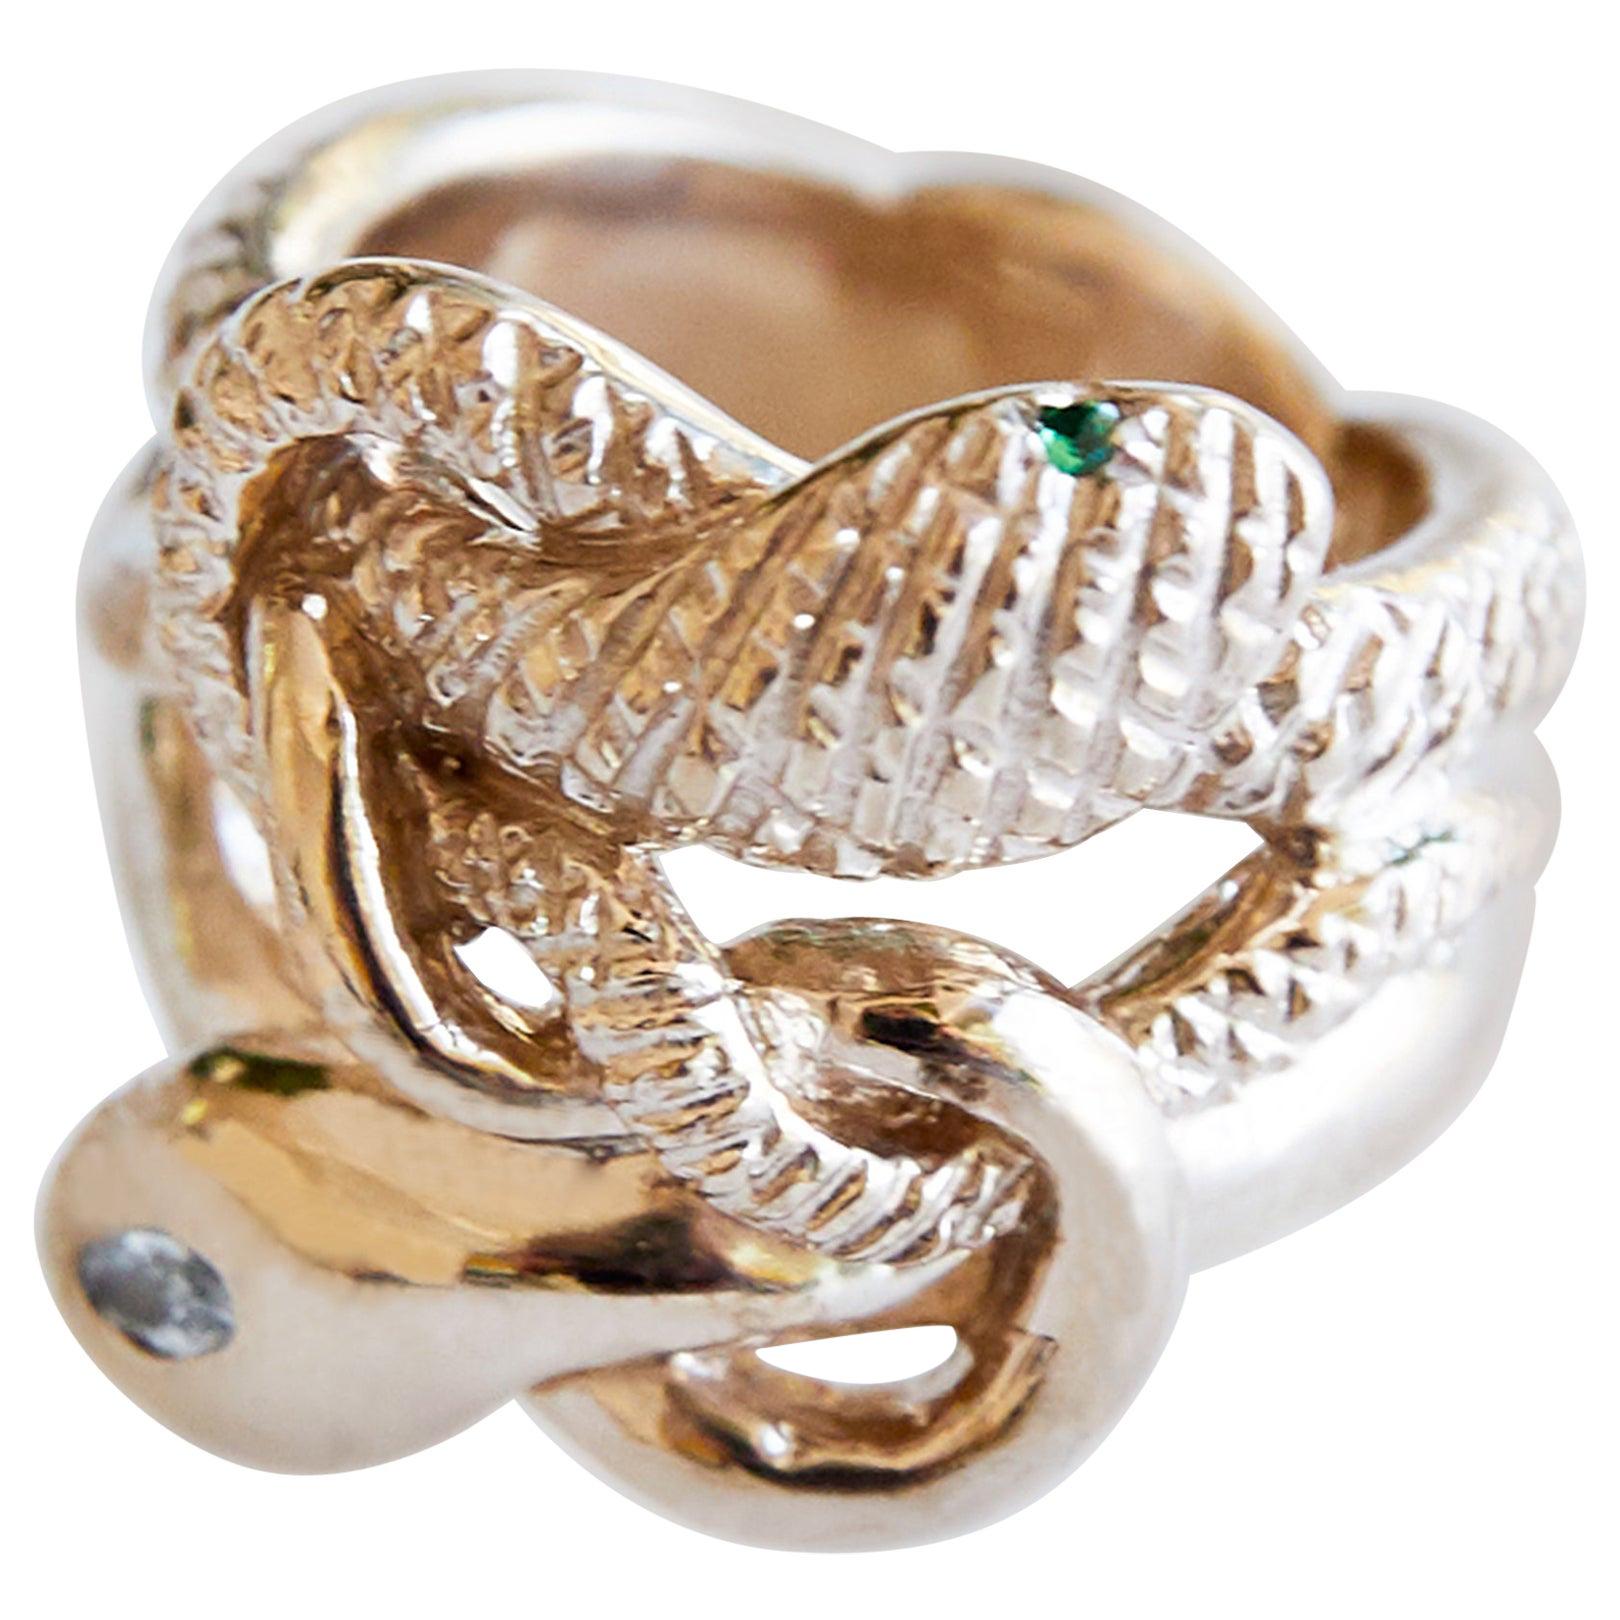 Saphir Marquis Double Snake Head Ring Smaragd Rubin  Augen Bronze J Dauphin

1 Marquis Saphir 2 Stück Smaragd 2 Stück Rubin 
J DAUPHIN 